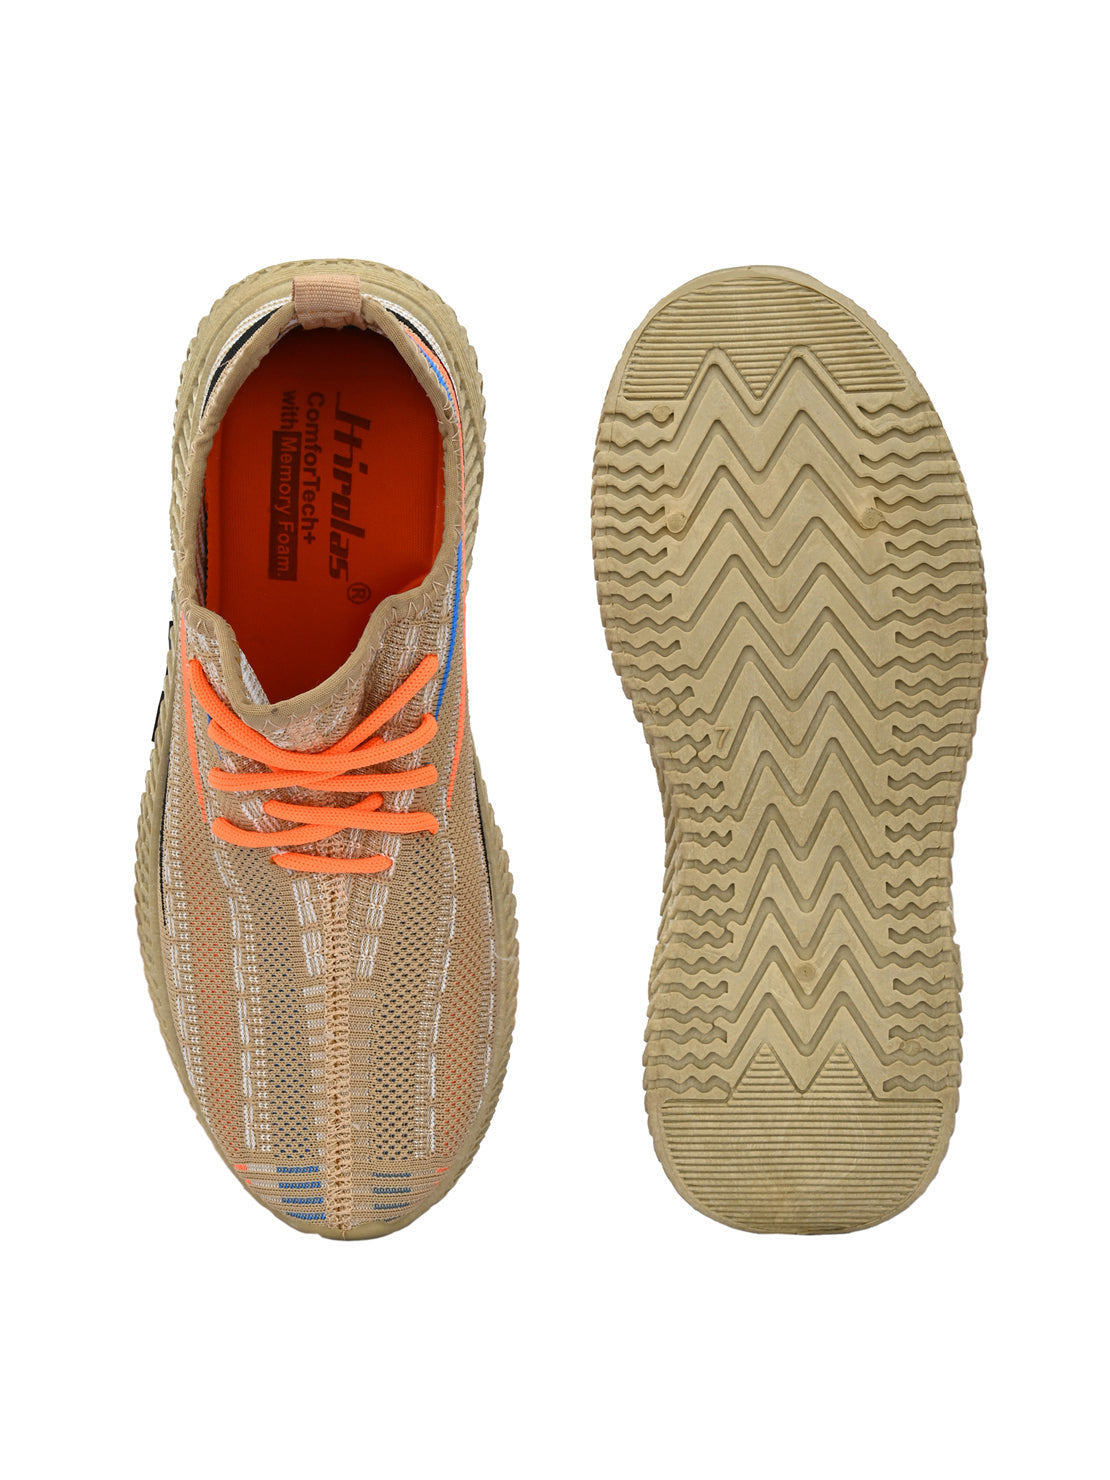 Hirolas® Men's Beige Knitted Running/Walking/Gym Lace Up Sport Shoes (HRL2037BGE)